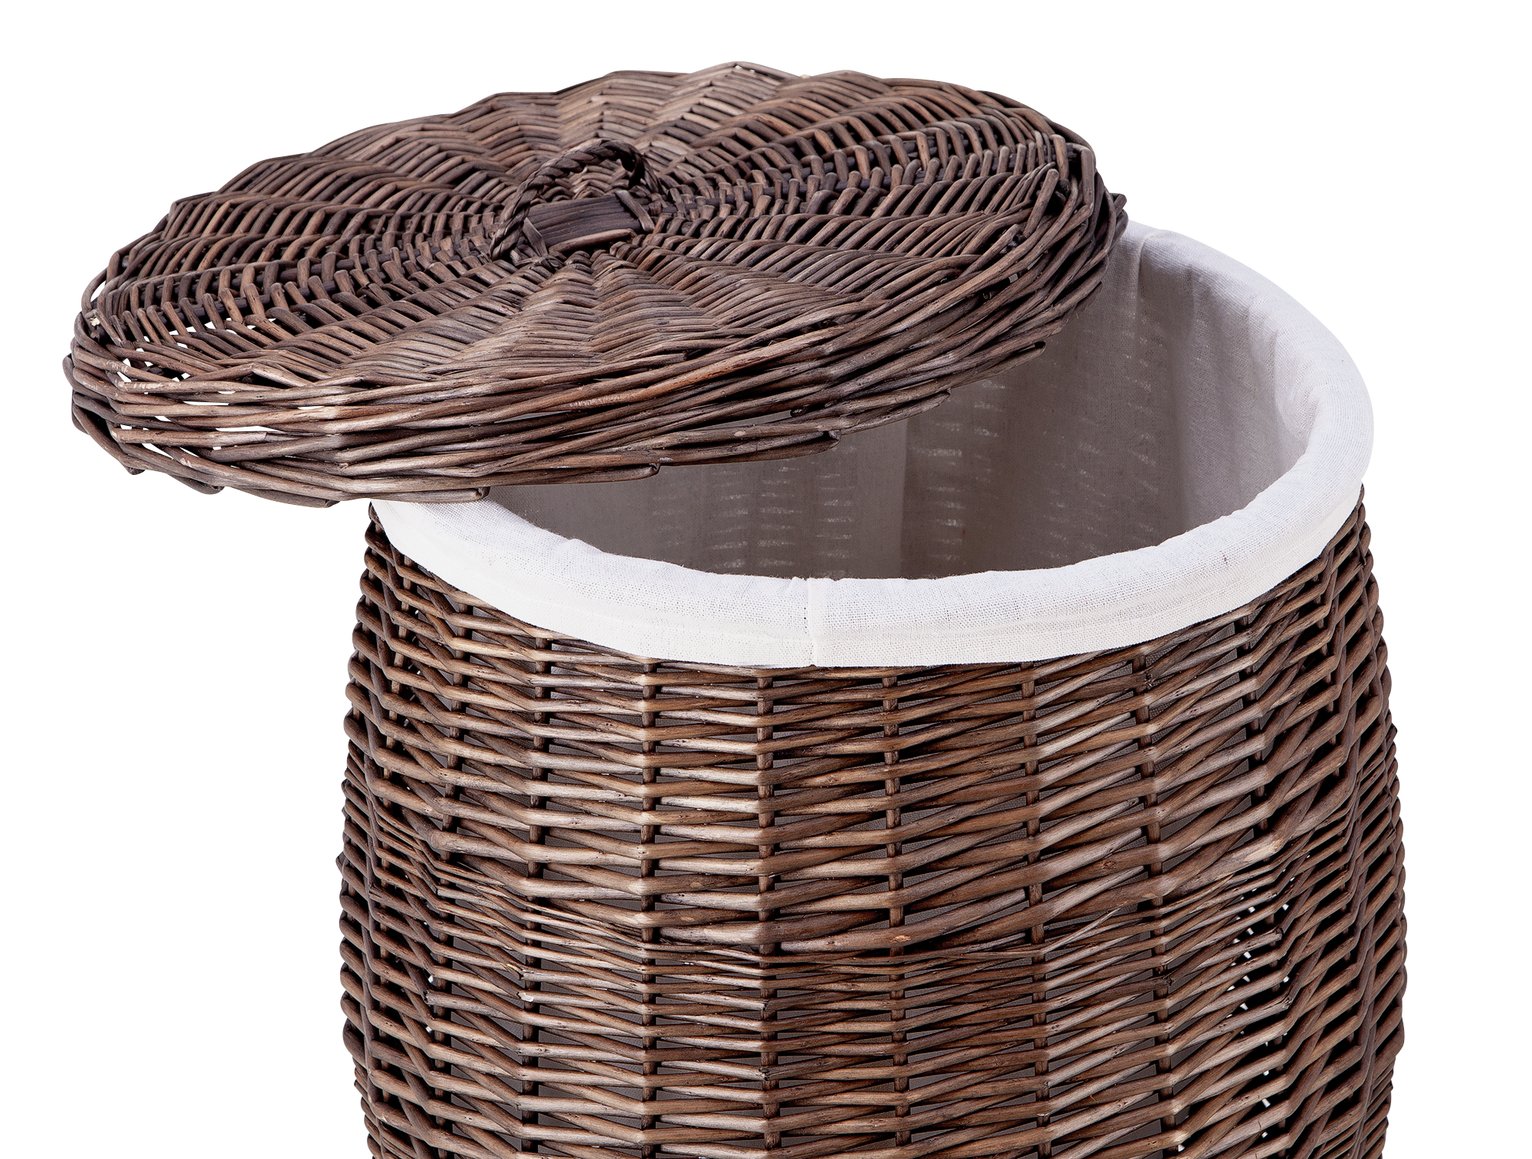 Argos Home Woven 64 Litre Wicker Laundry Basket Reviews